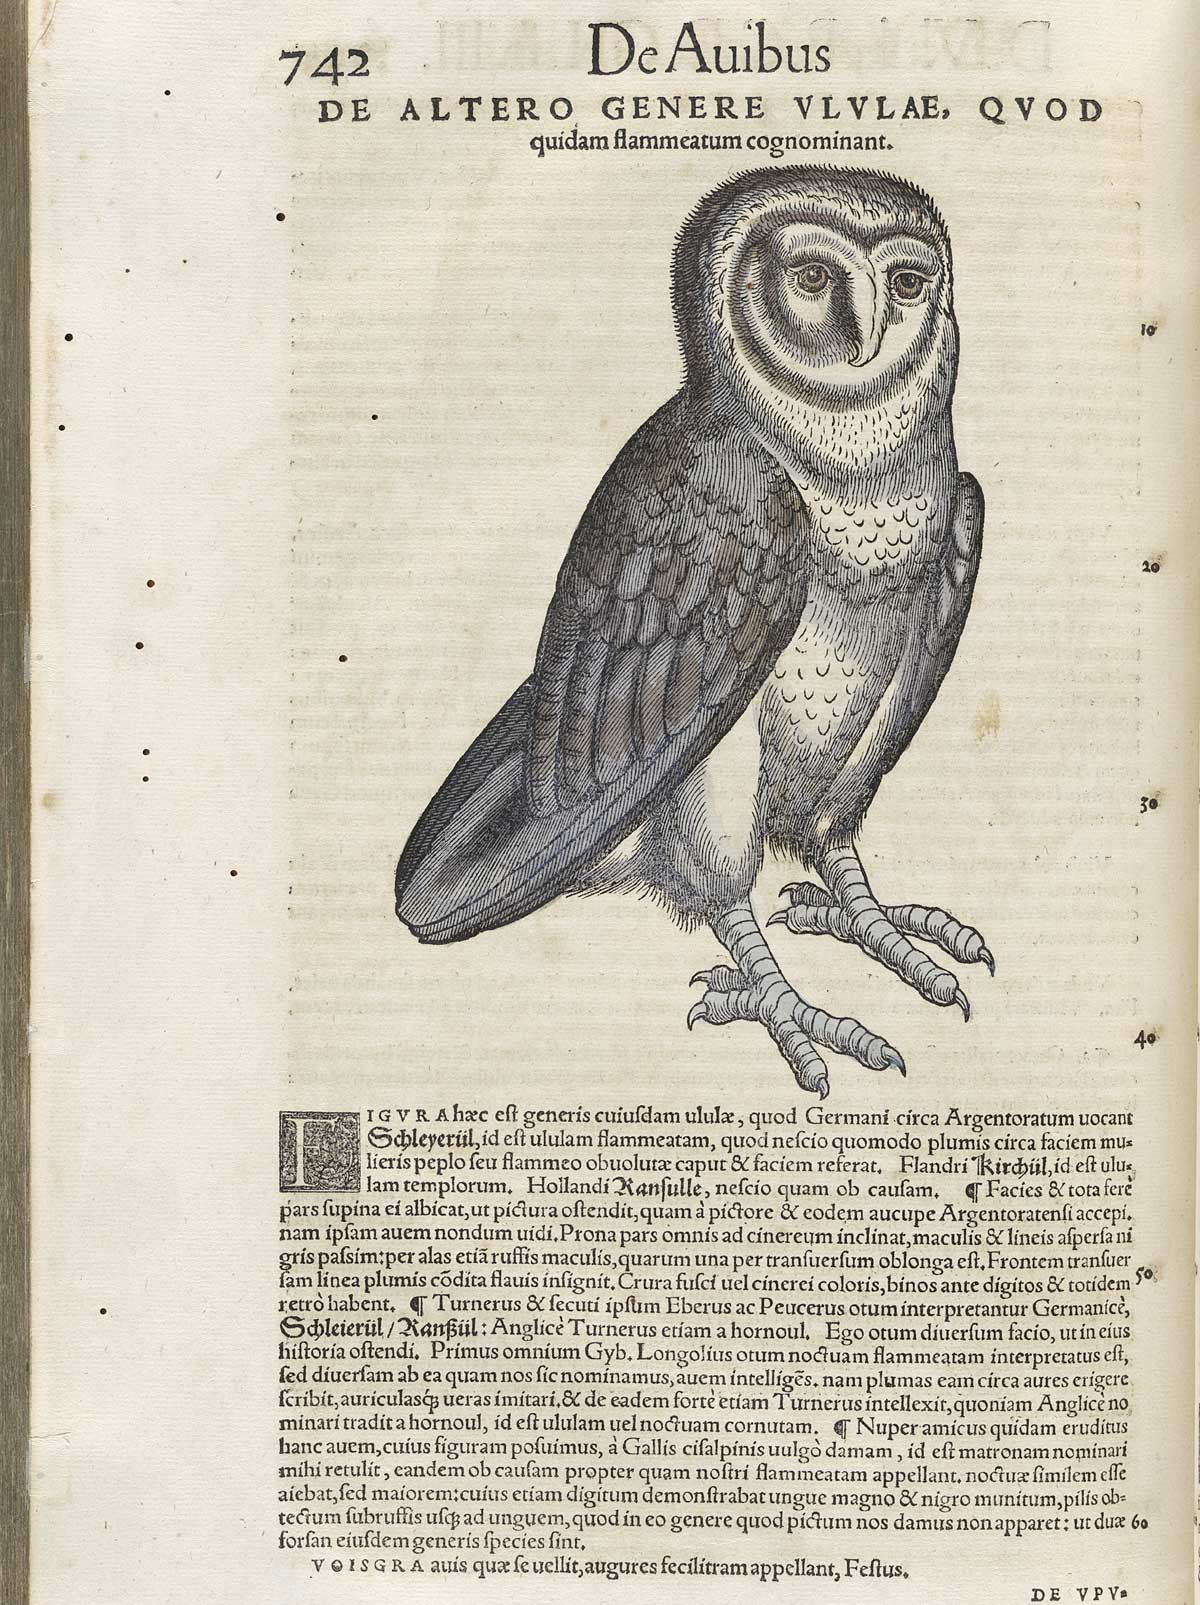 Page 742 from volume 3 of Conrad Gessner's Conradi Gesneri medici Tigurini Historiae animalium, featuring the colored woodcut of an owl.